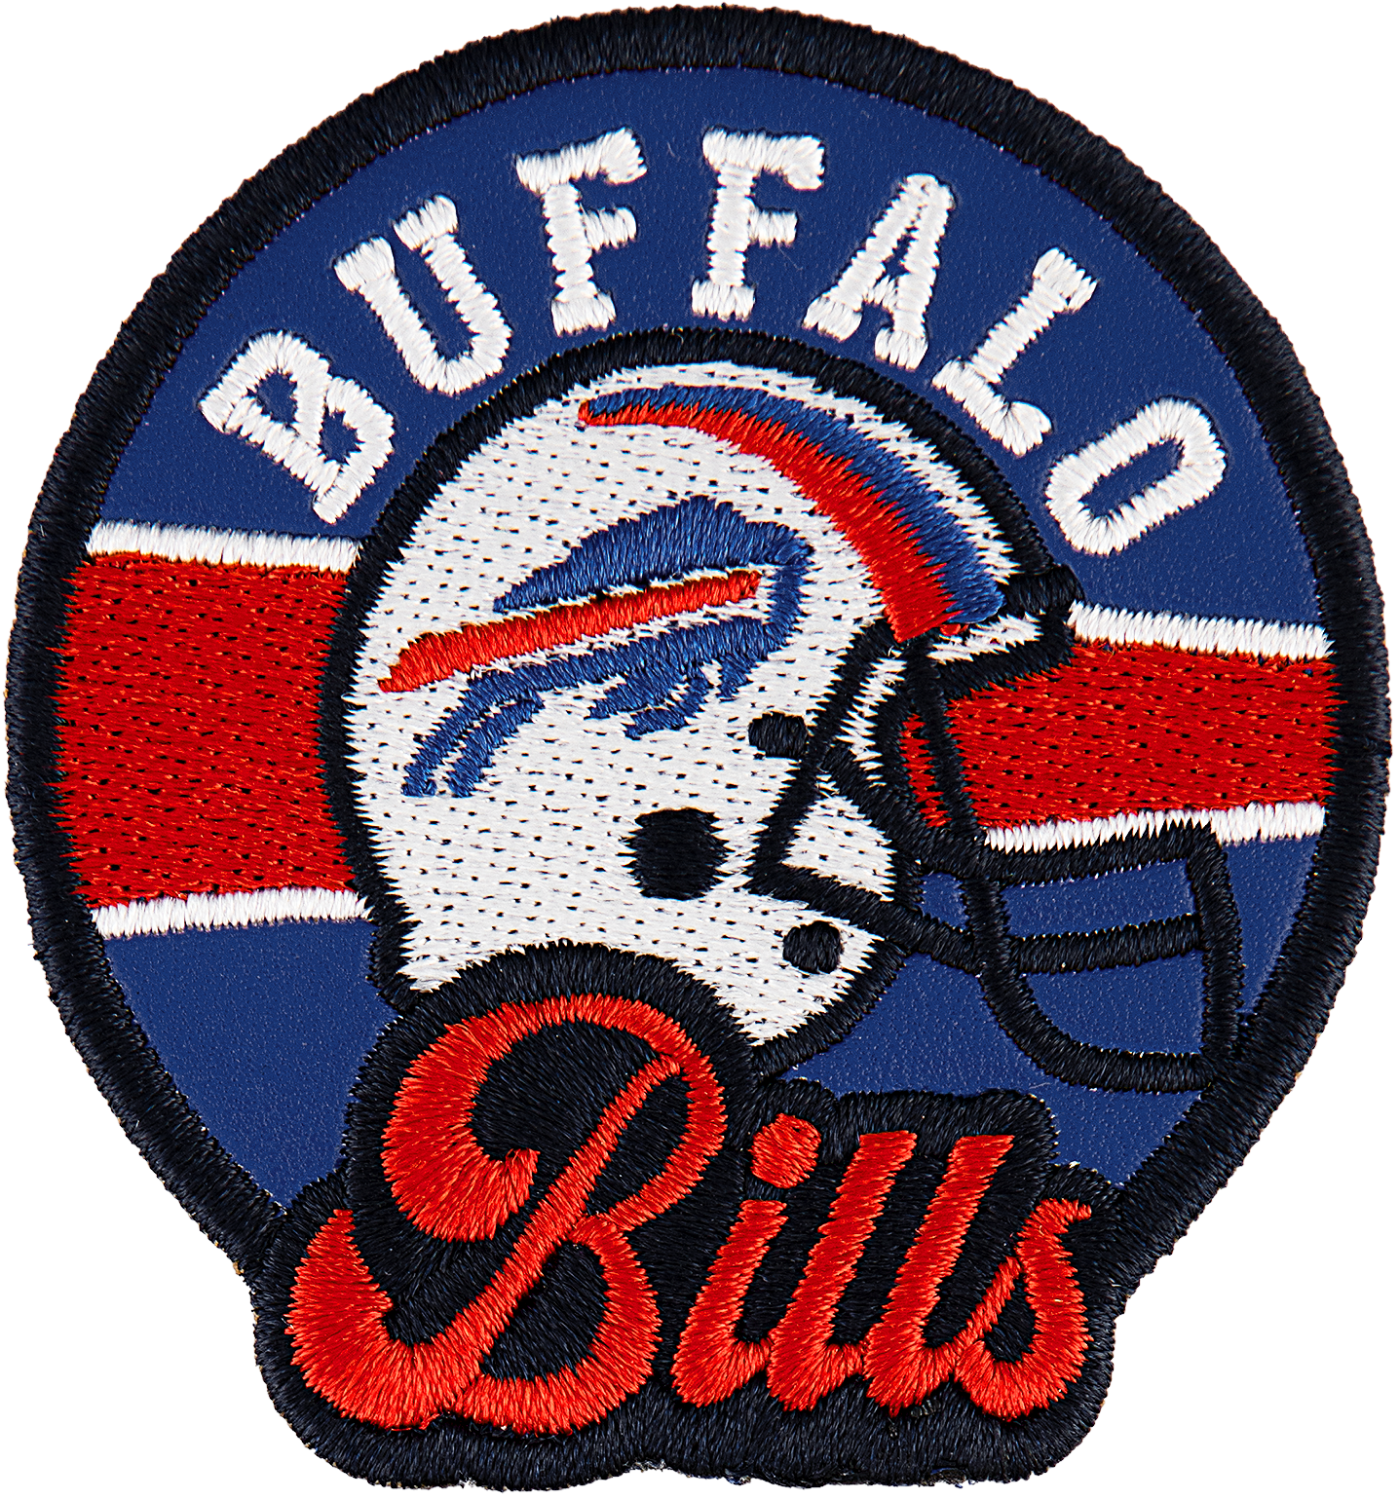 BUFFALO BILLS NFL FOOTBALL 2 ROUND TEAM LOGO PATCH